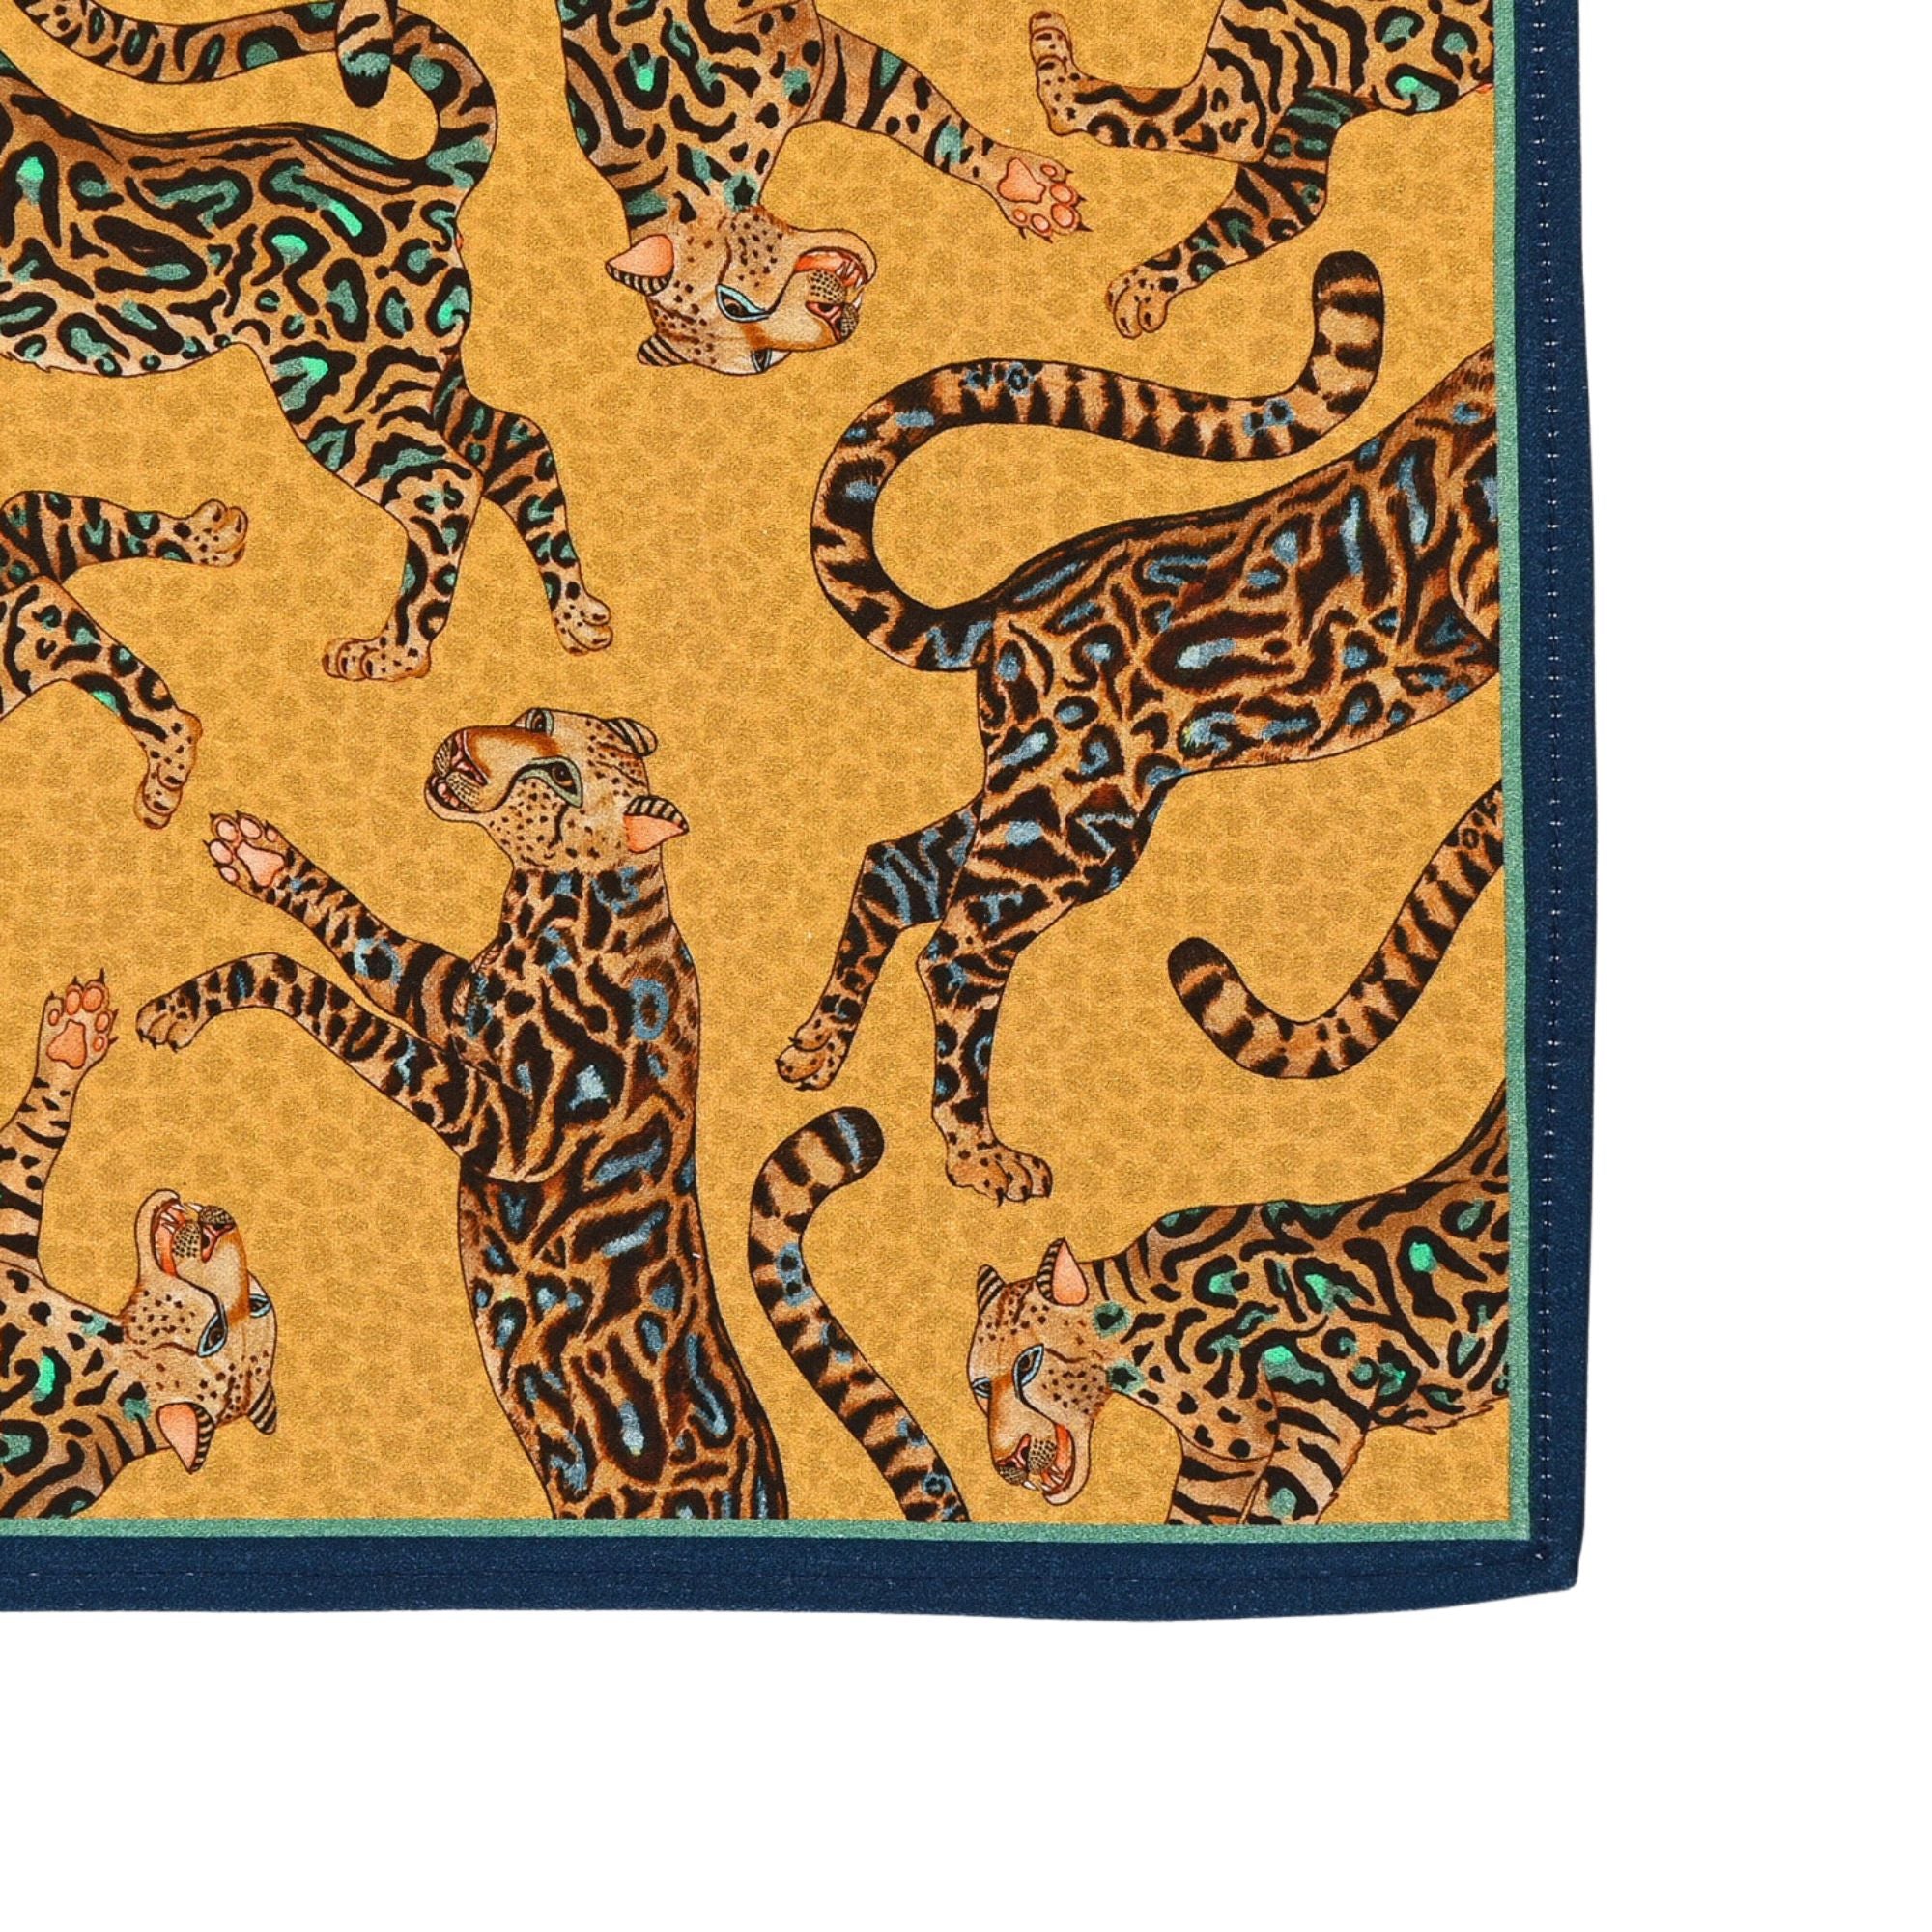 Simple modern white chic faux gold cheetah print paper napkins